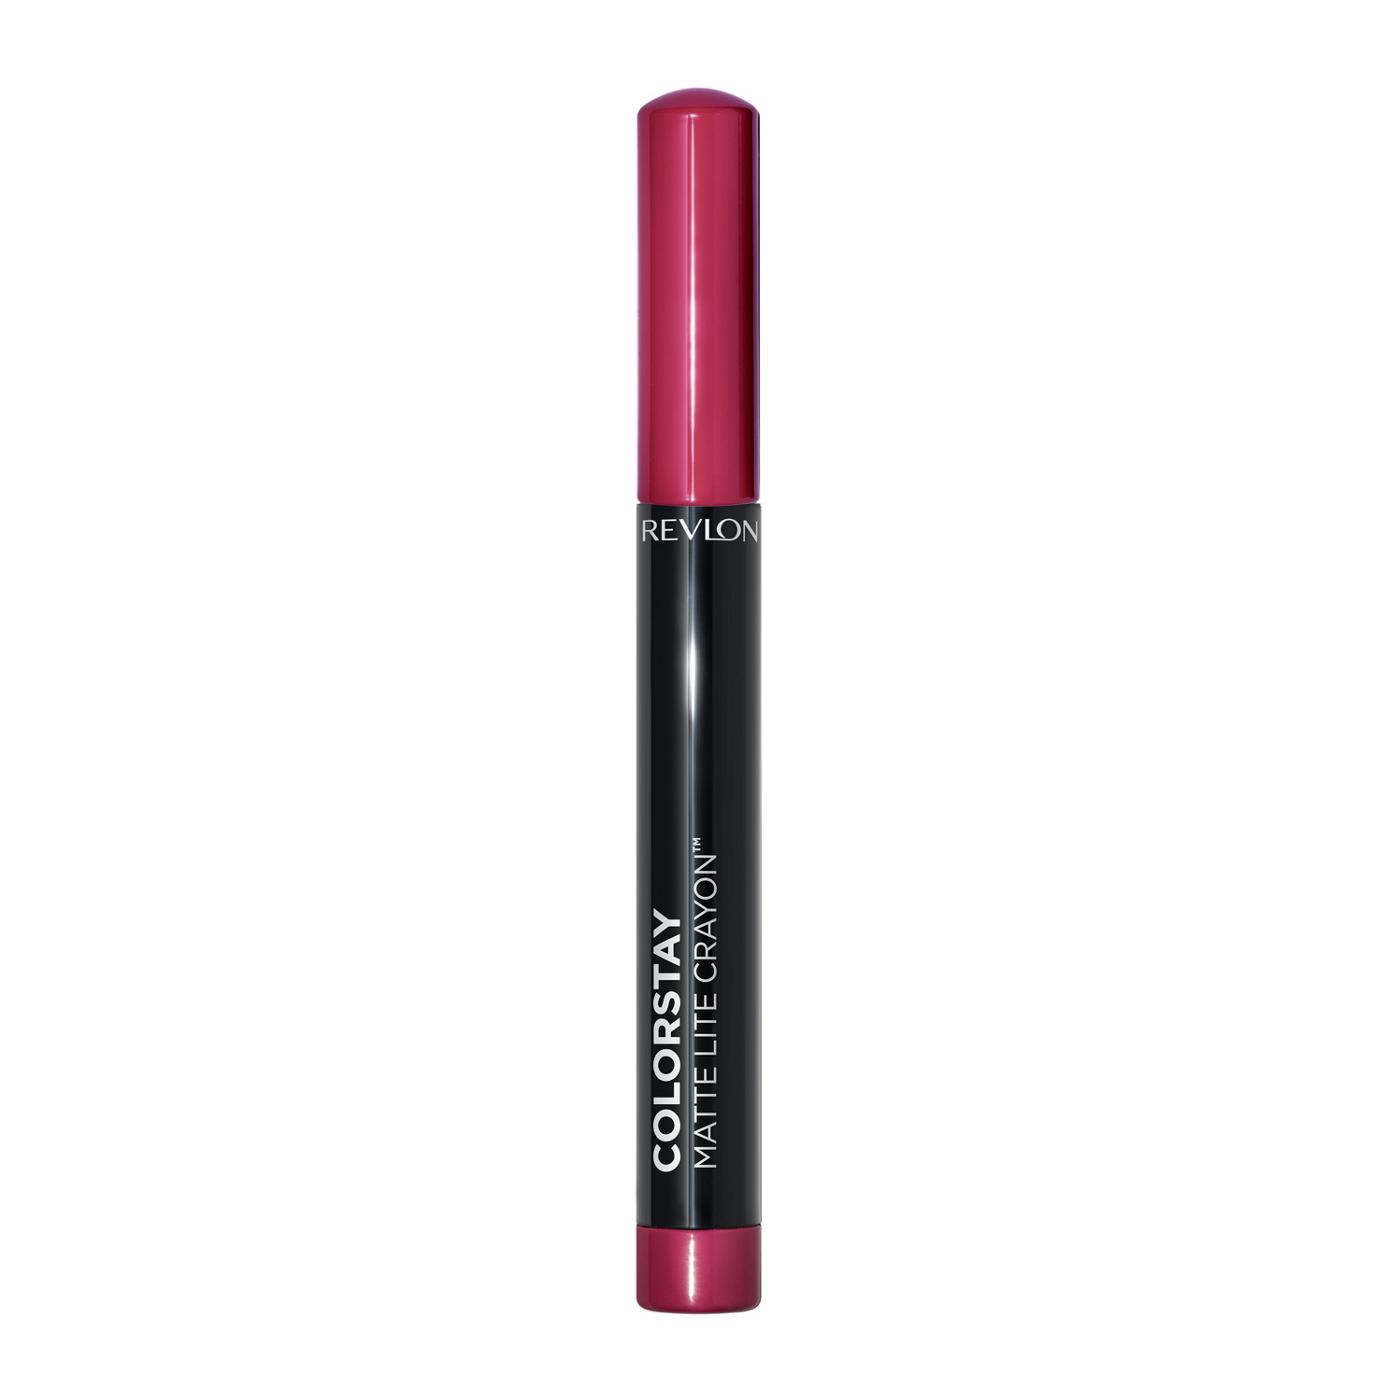 Revlon ColorStay Matte Lite Crayon Lipstick - Lifted; image 1 of 7